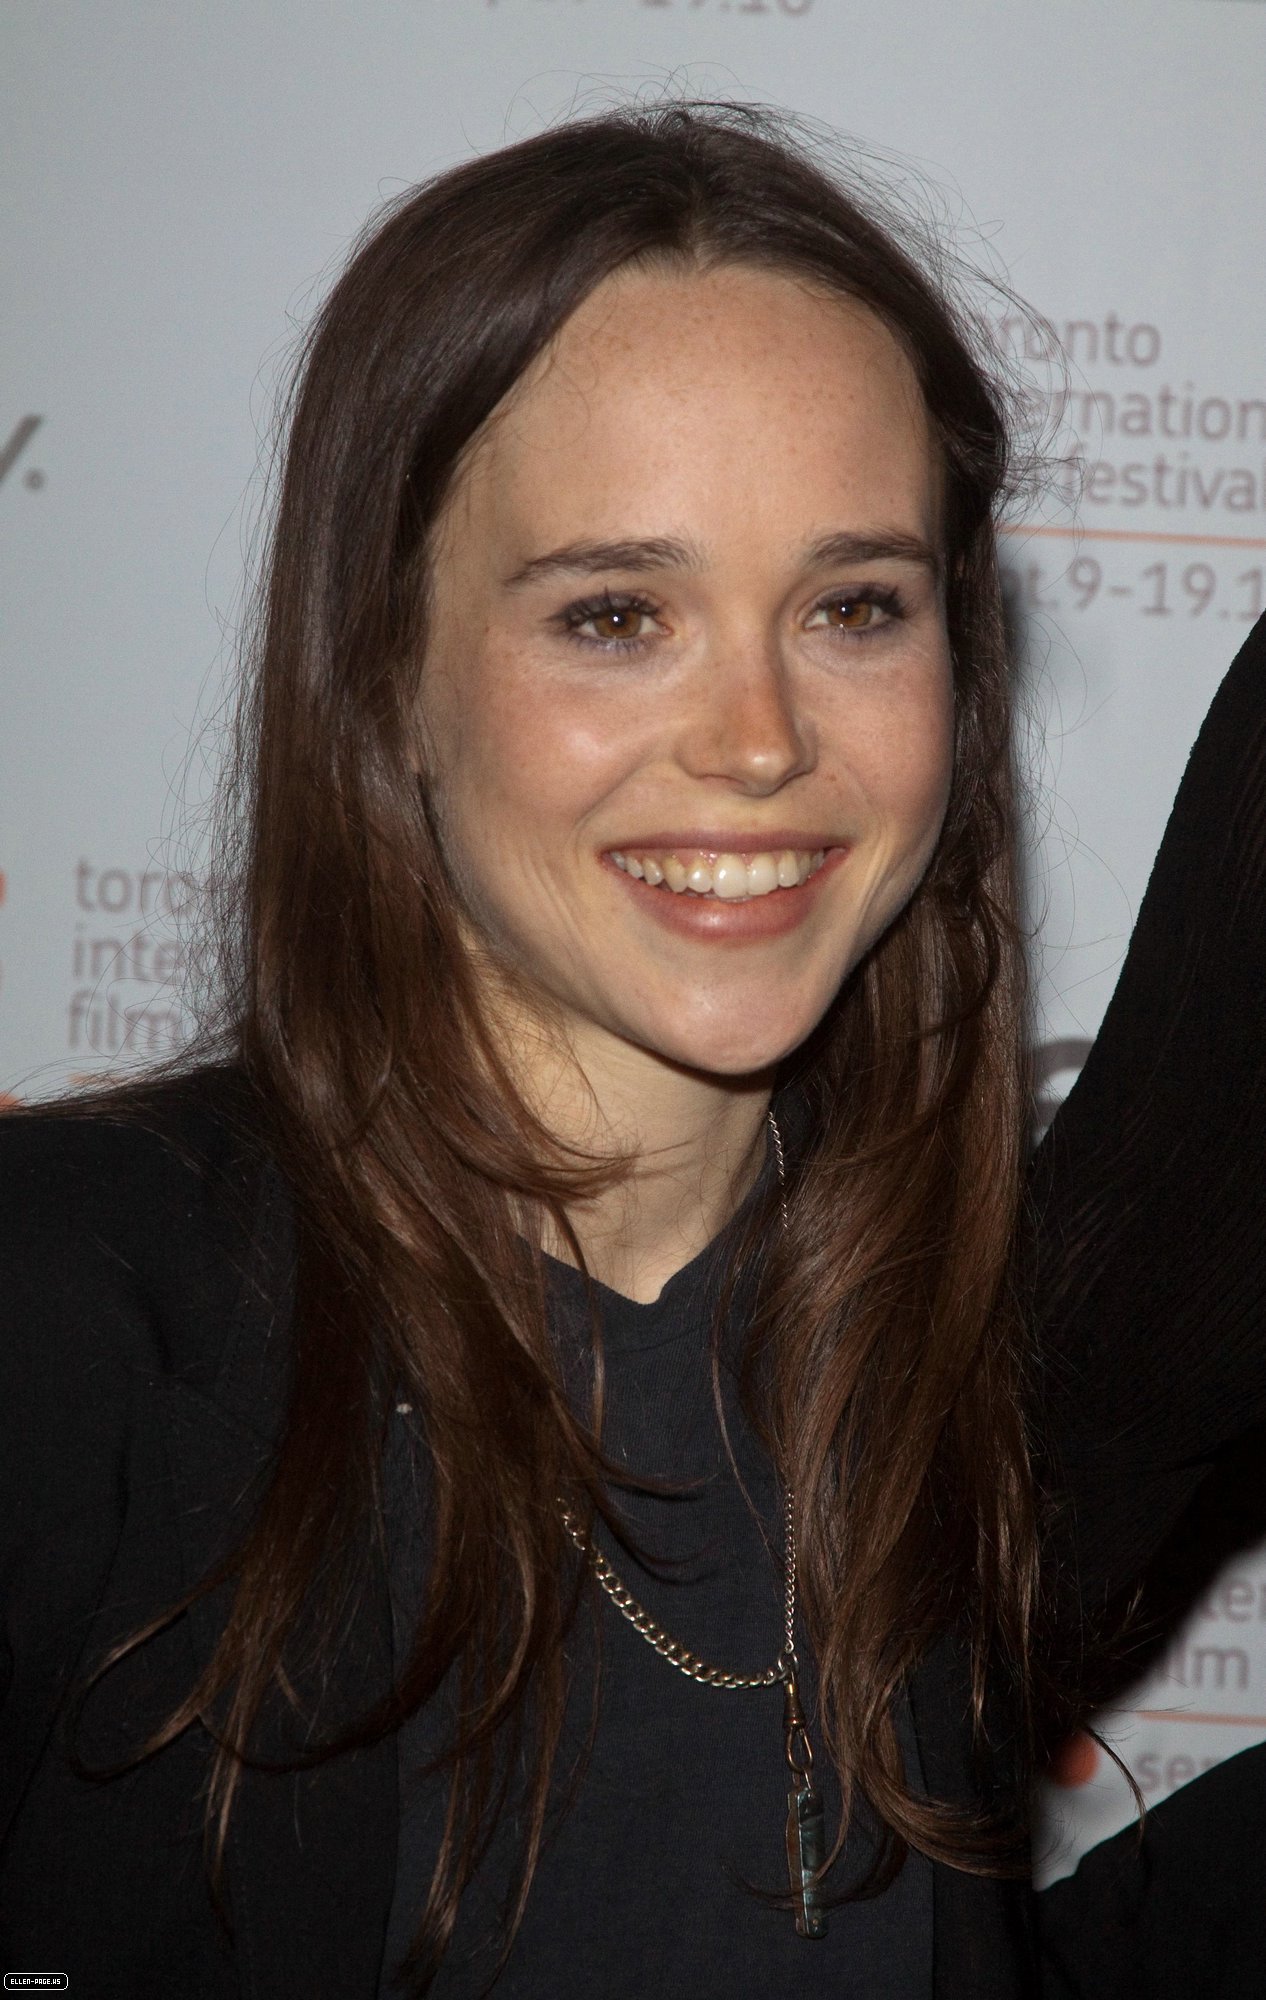 Toronto Film Festival Premiere - Ellen Page Photo (15675428) - Fanpop